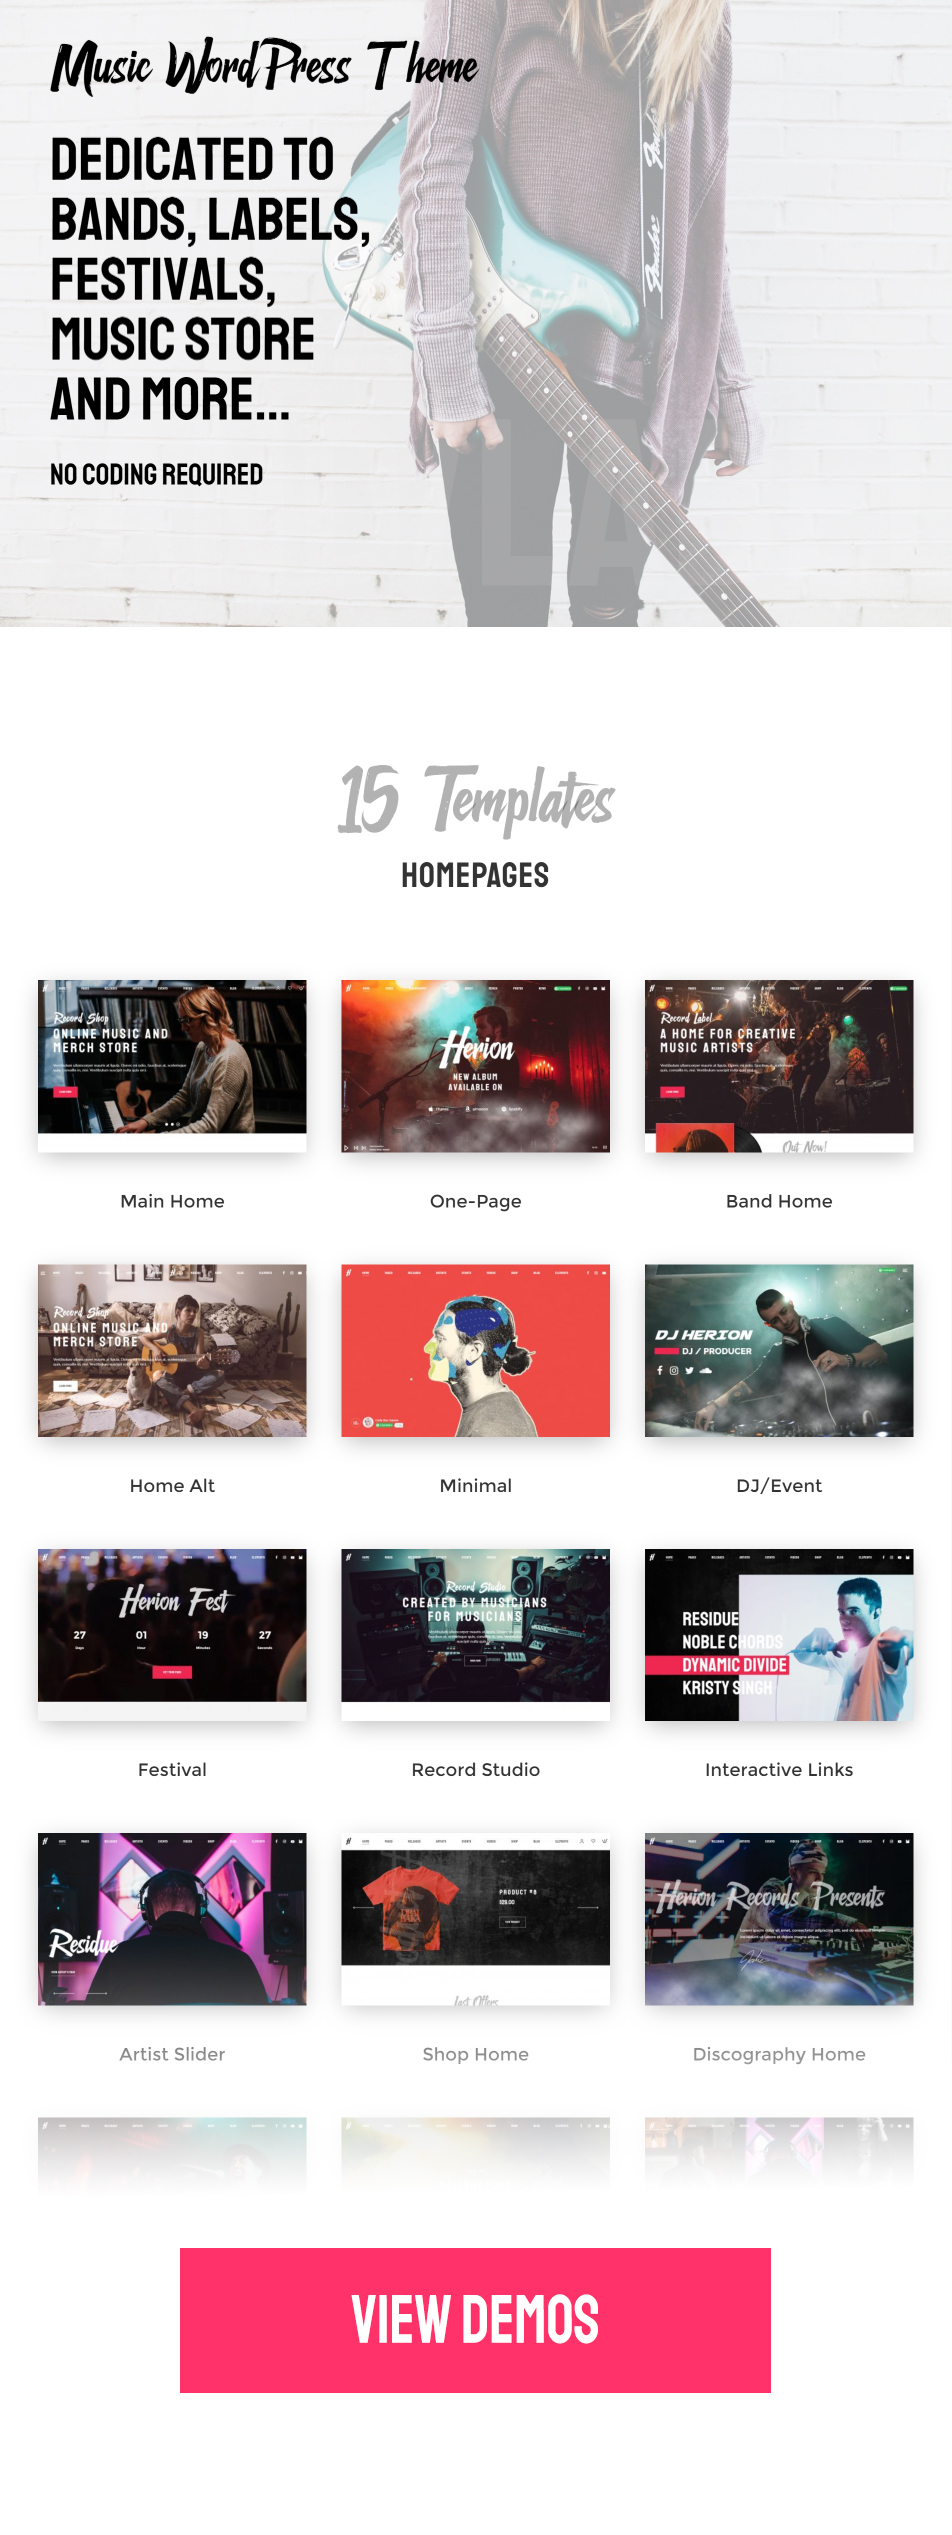 122 WordPress Theme Photos - Free & Royalty-Free Stock Photos from Dreamstime